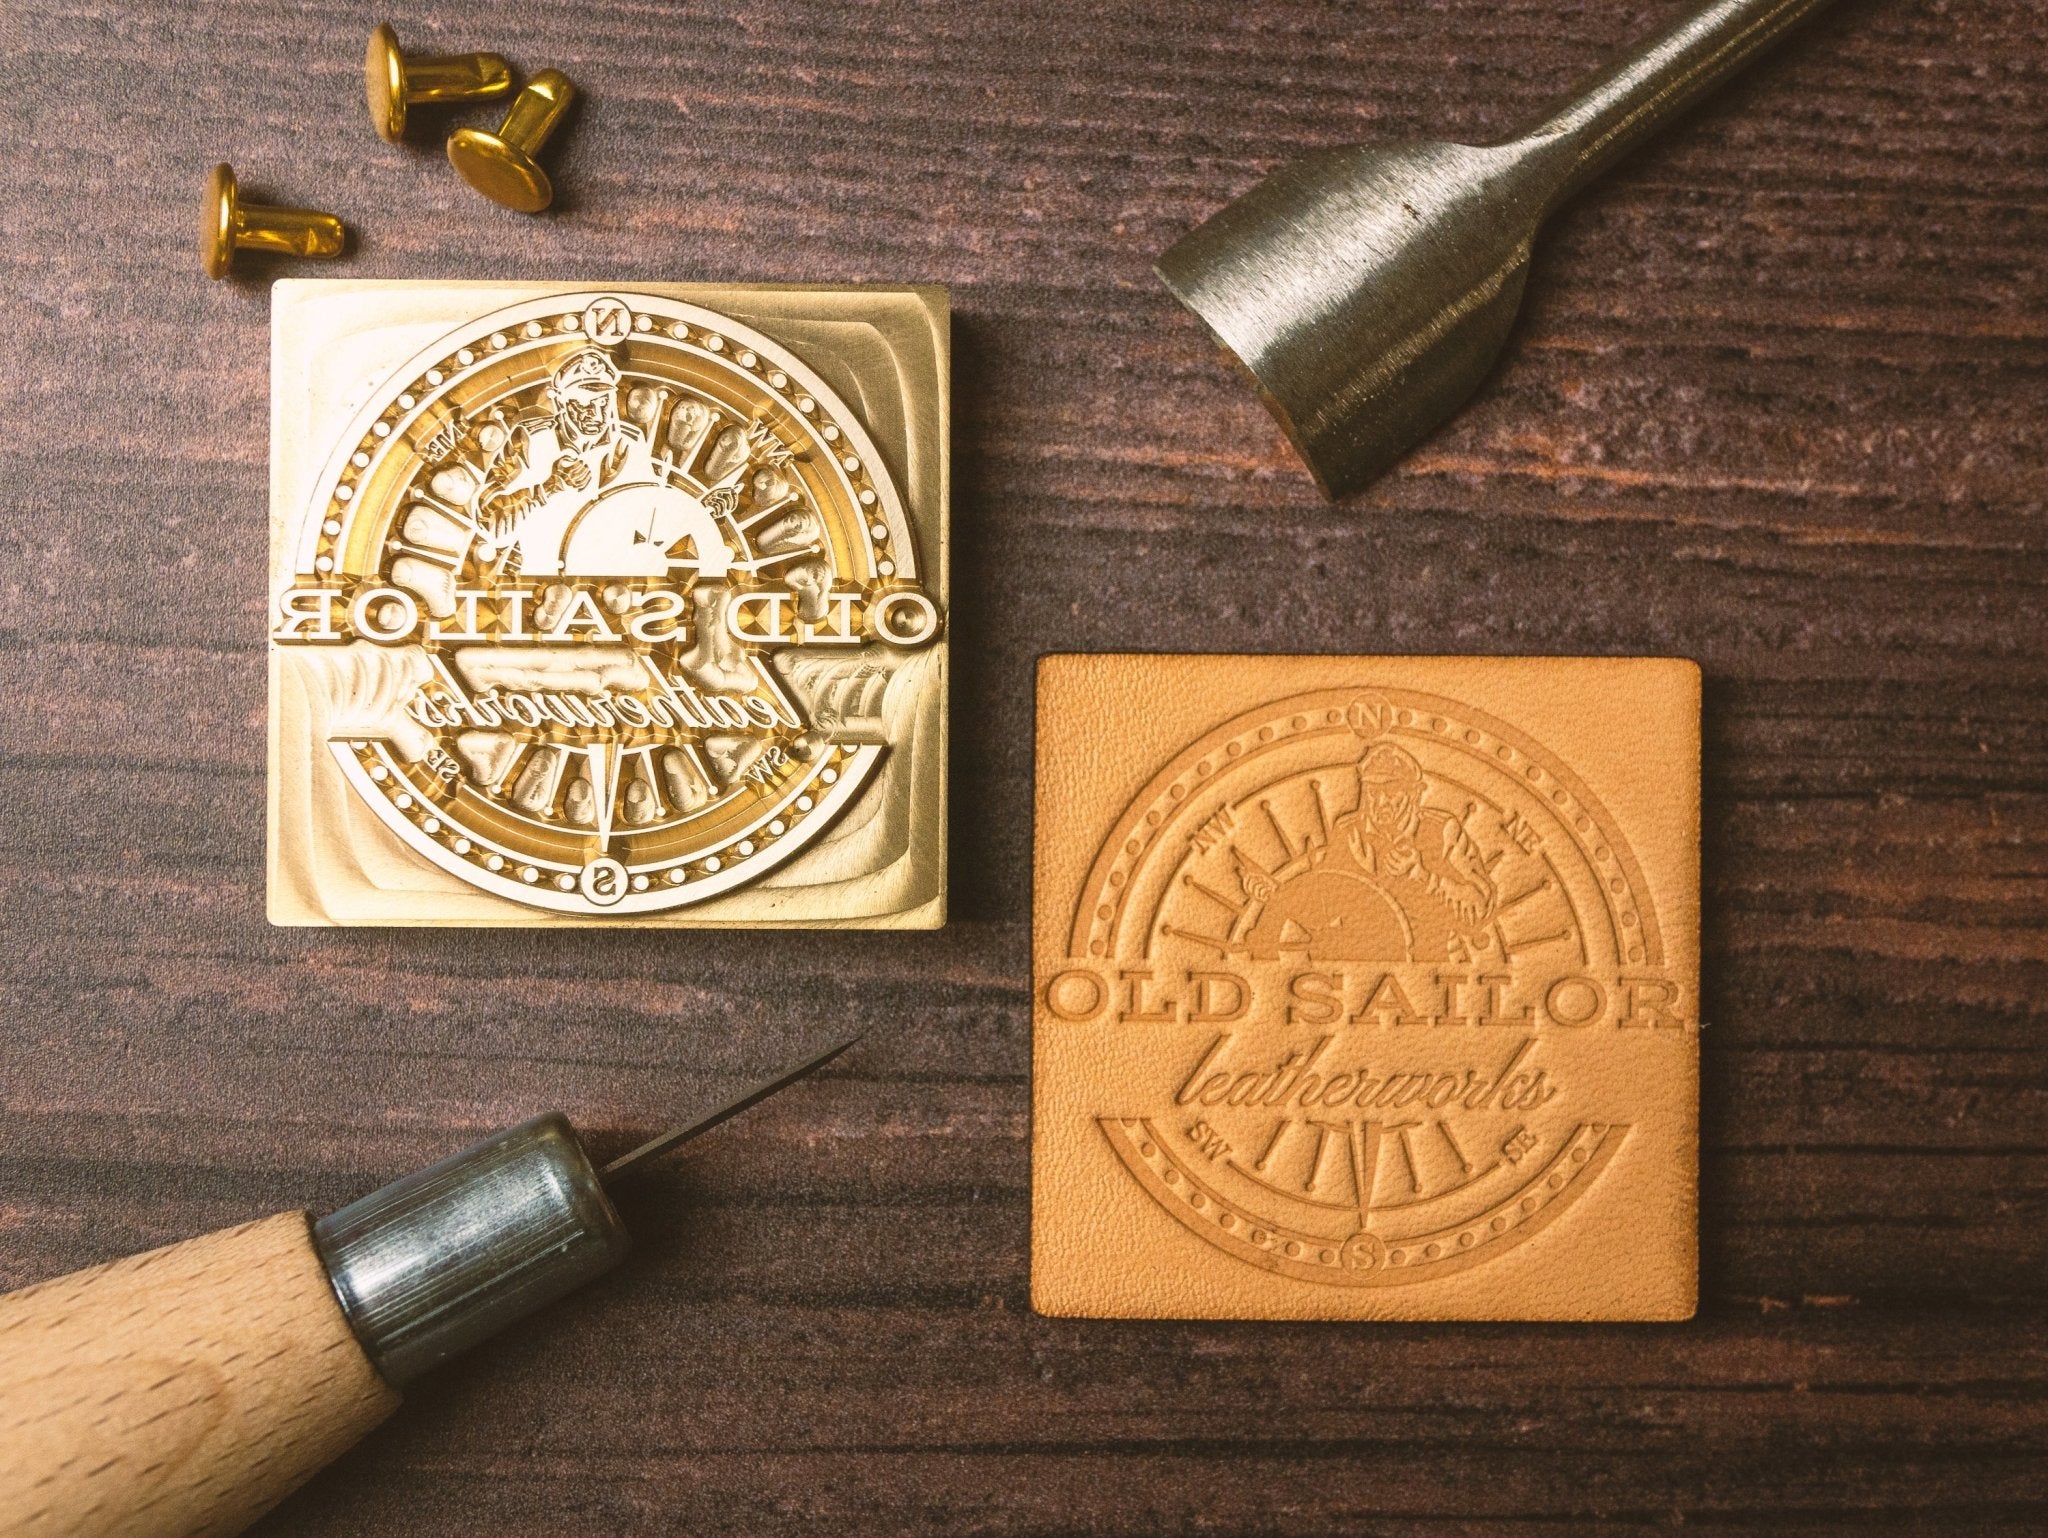 Custom Leather Stamp - Outpost Workshop